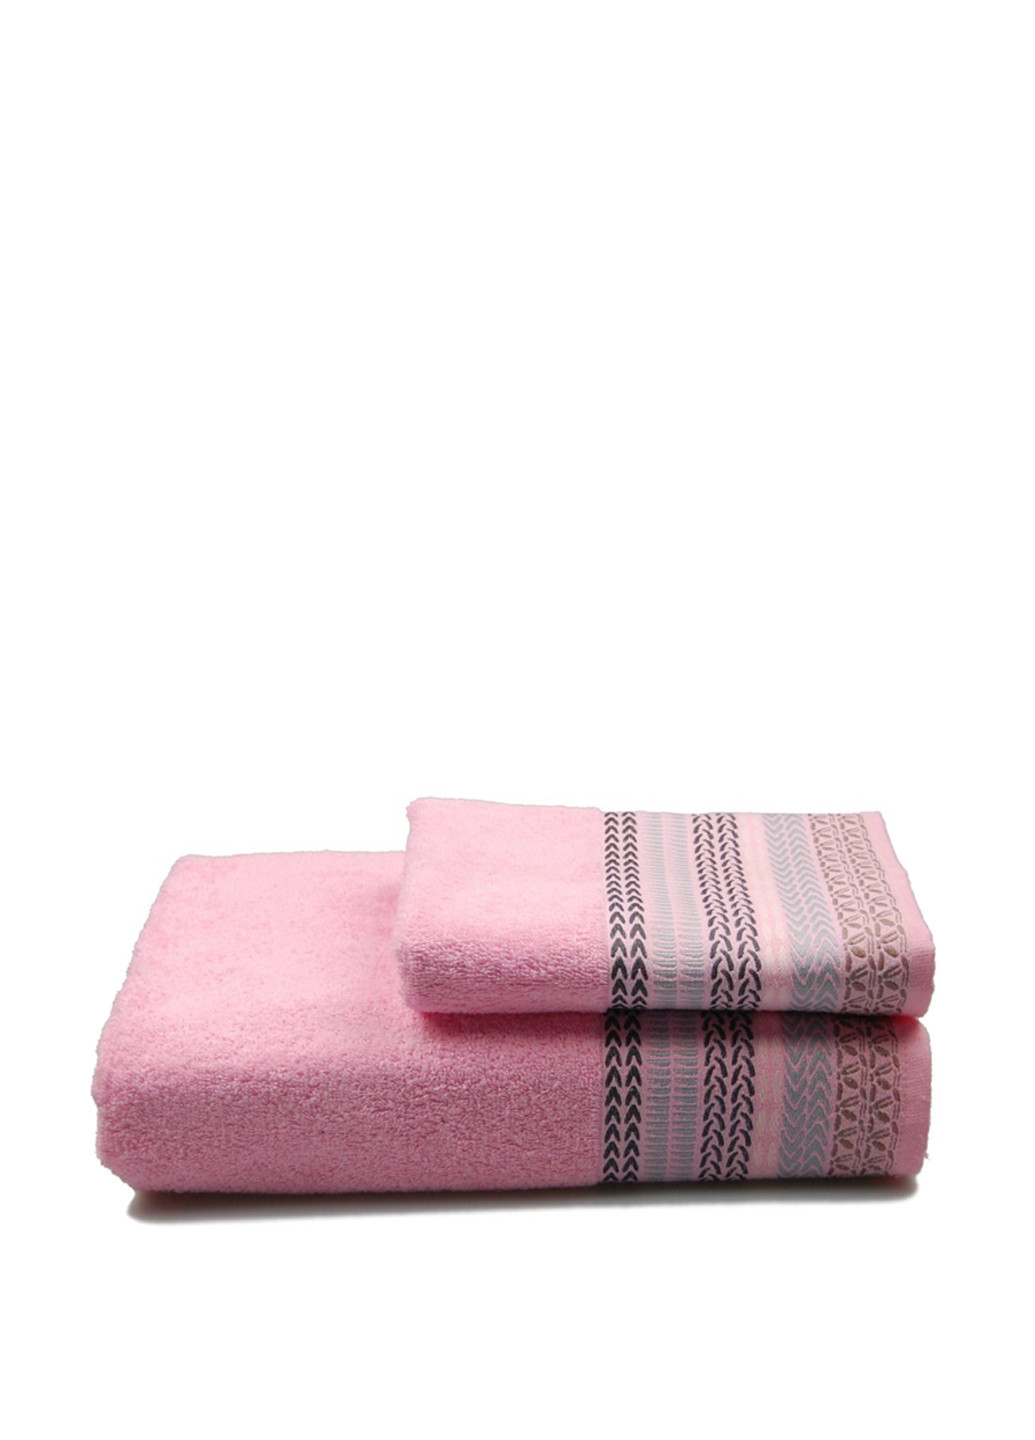 Home Line рушник, 70х140 см рожевий виробництво - Туреччина